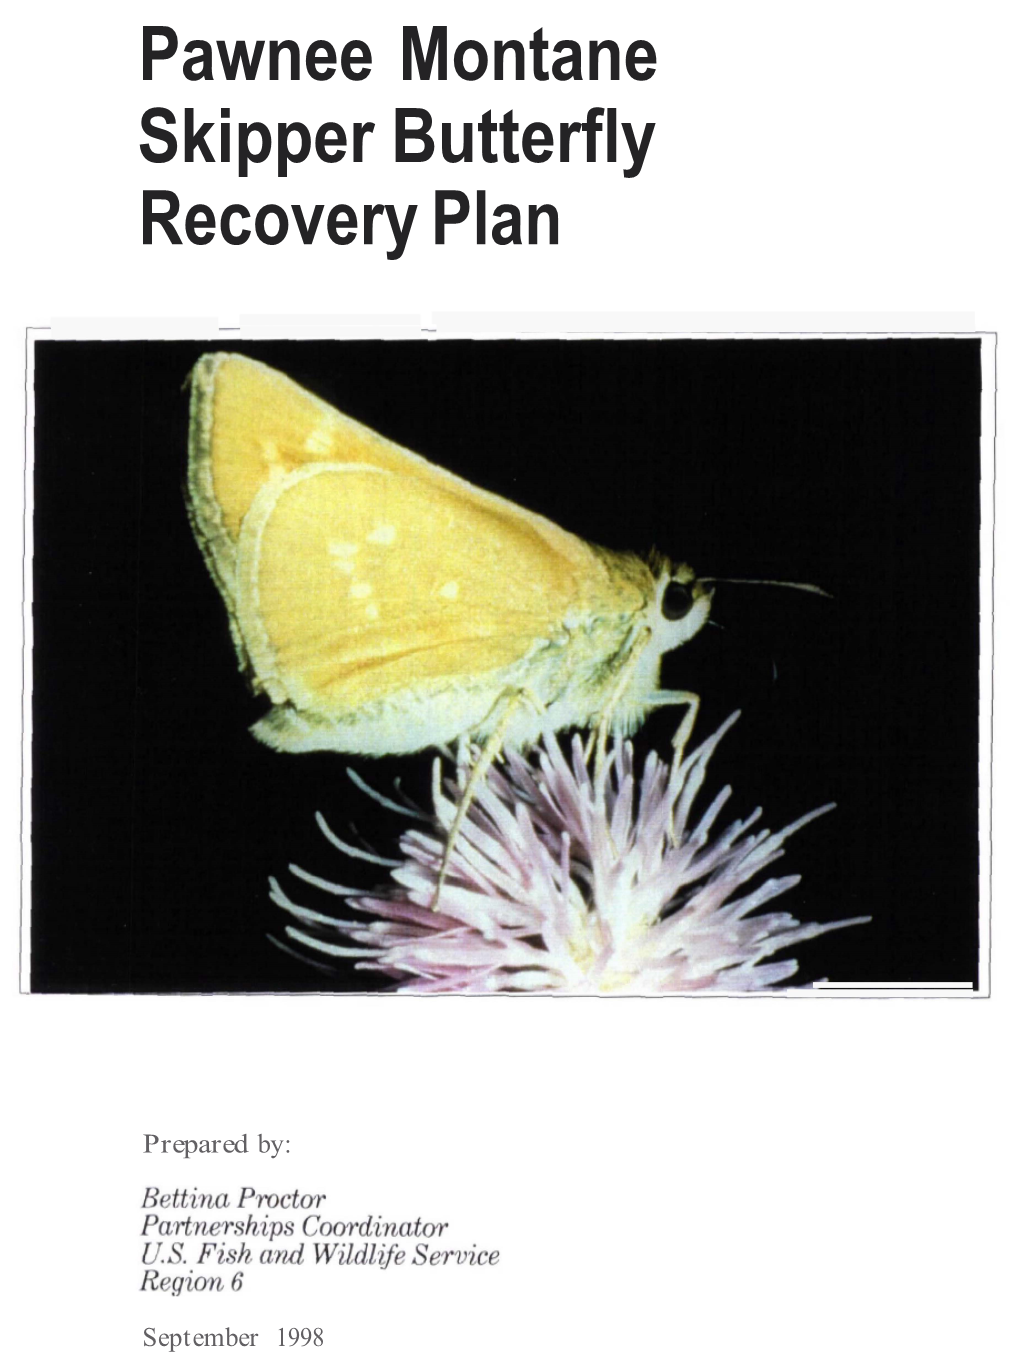 Pawnee Montane Skipper Recovery Plan